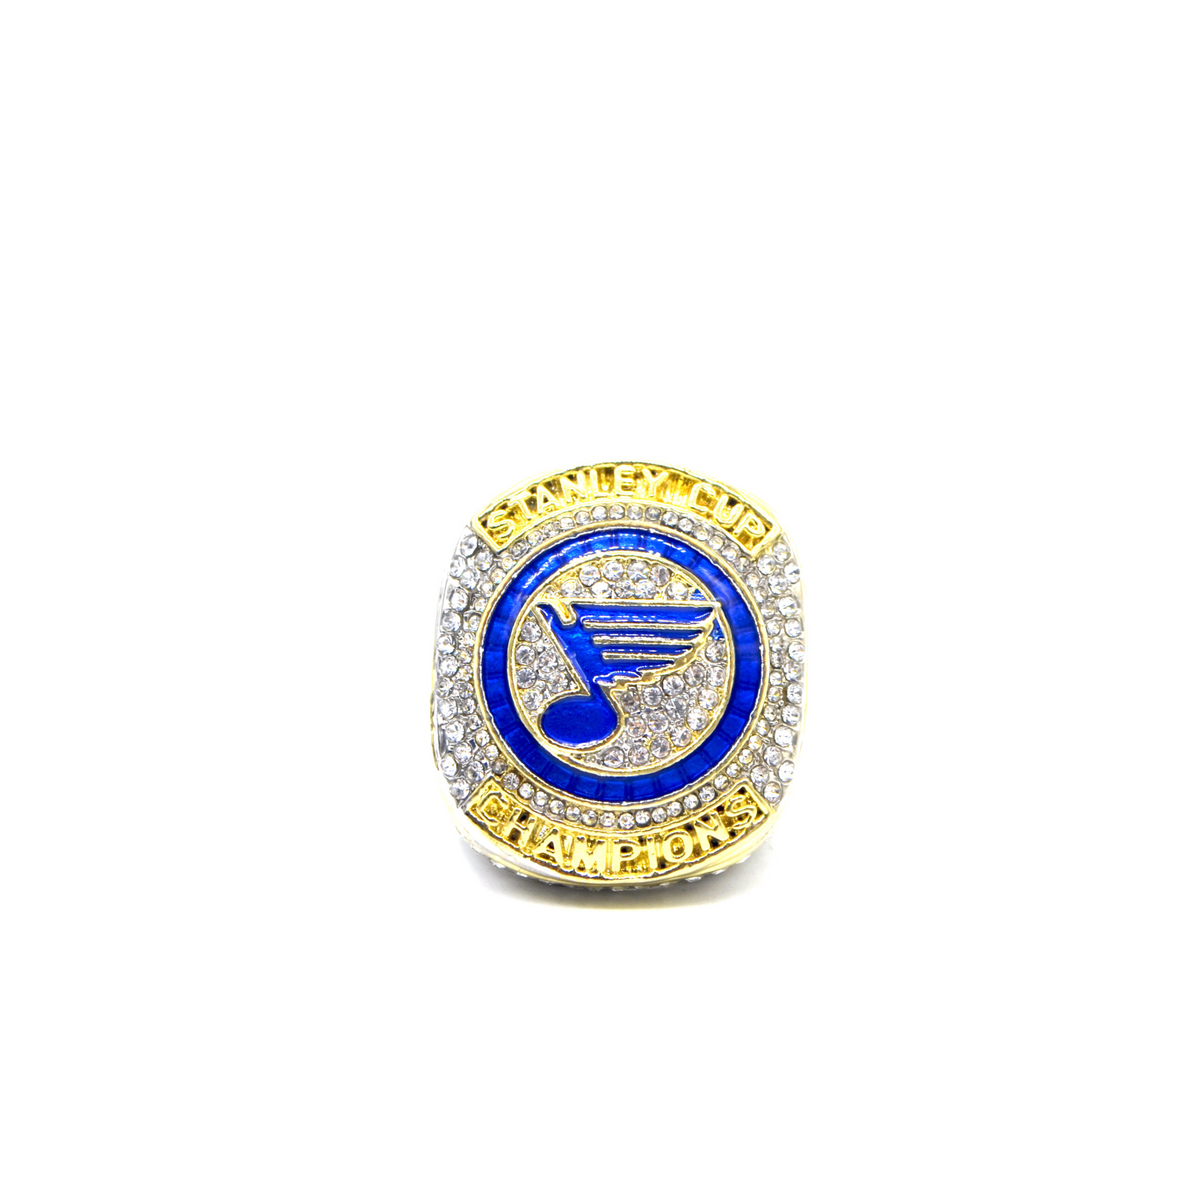 2019 St. Louis Blues Replica Championship Ring